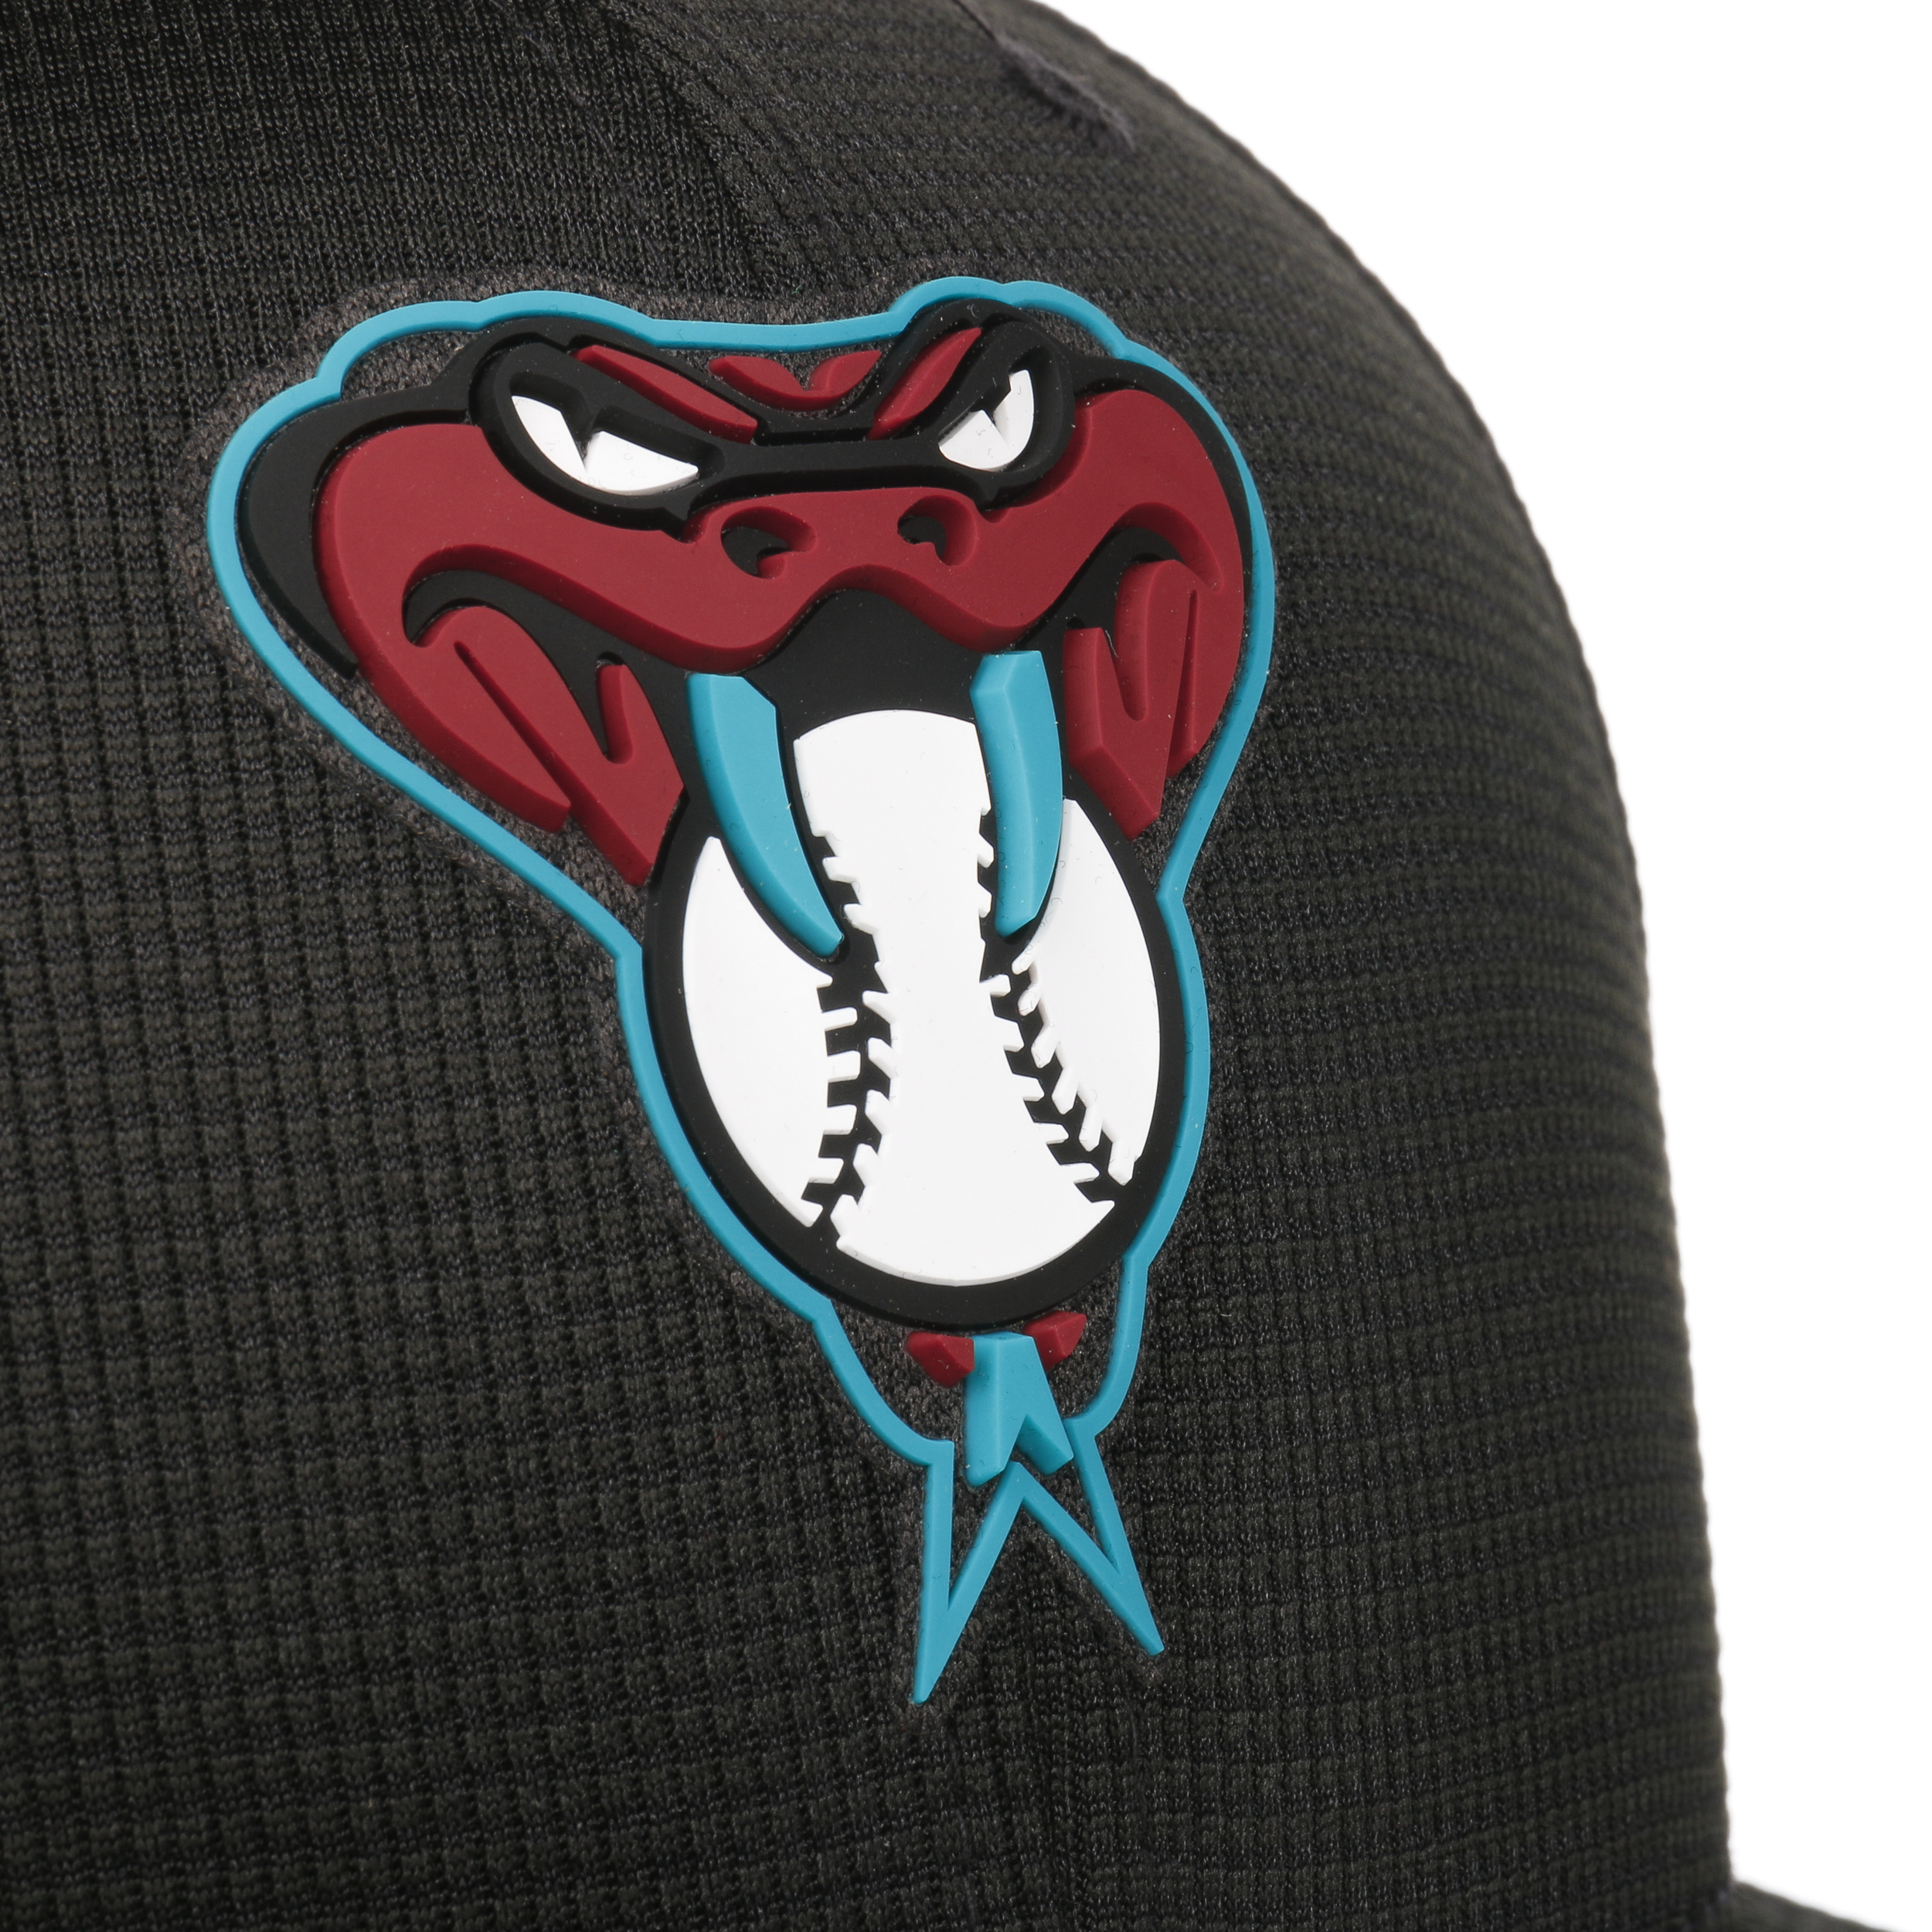 New Era 9FIFTY Arizona Diamondbacks Snake Head Snapback Hat - Black, Black, Red